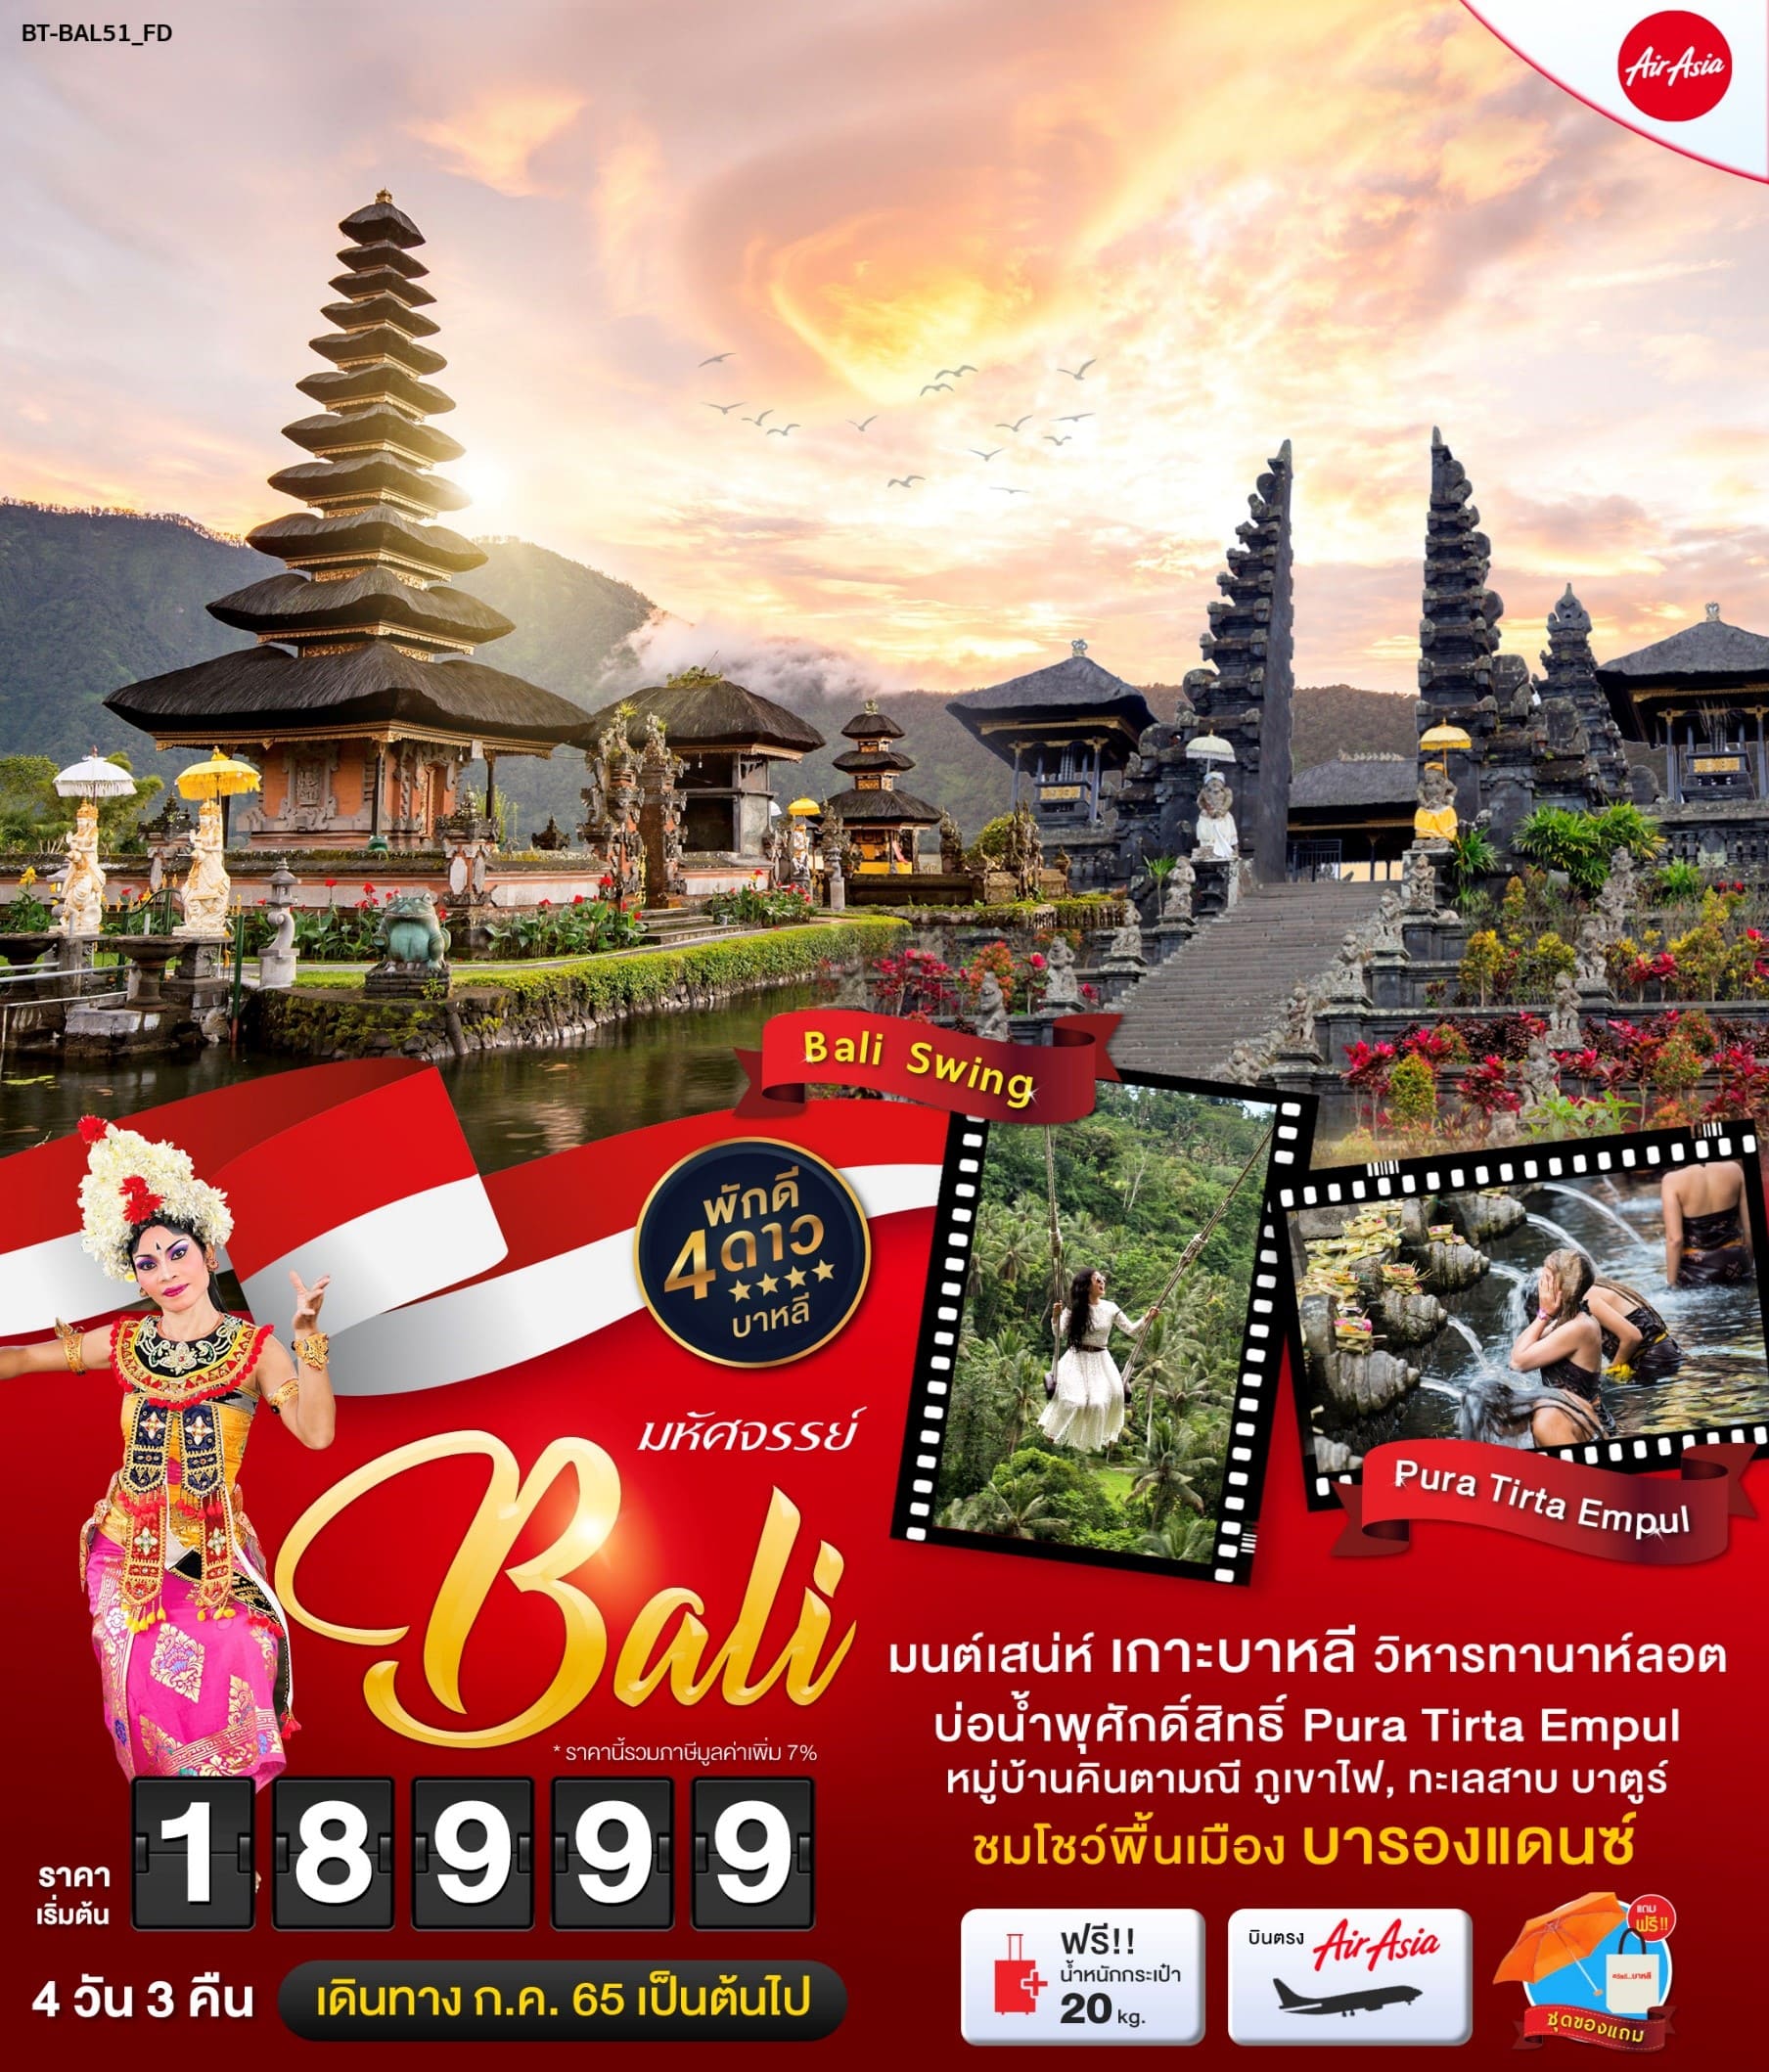 BT-BAL51 มหัศจรรย์ Bali